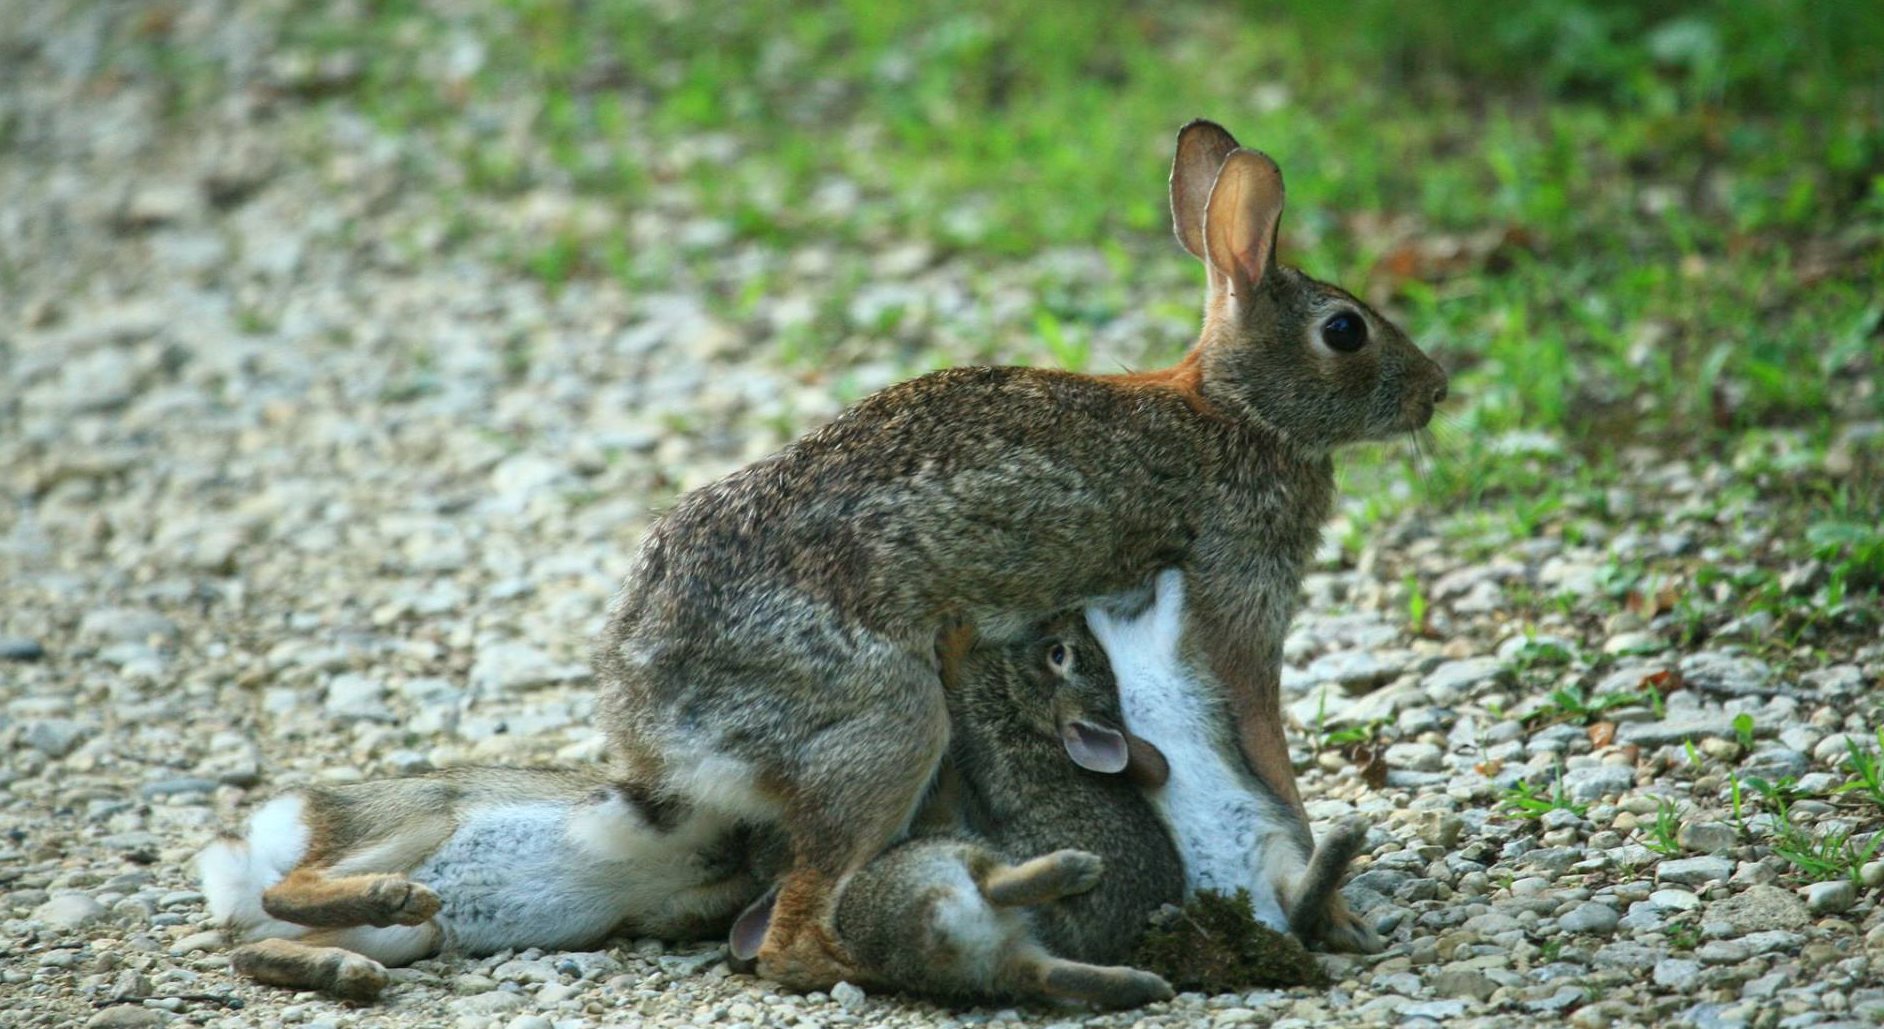 Female rabbit nursing its young